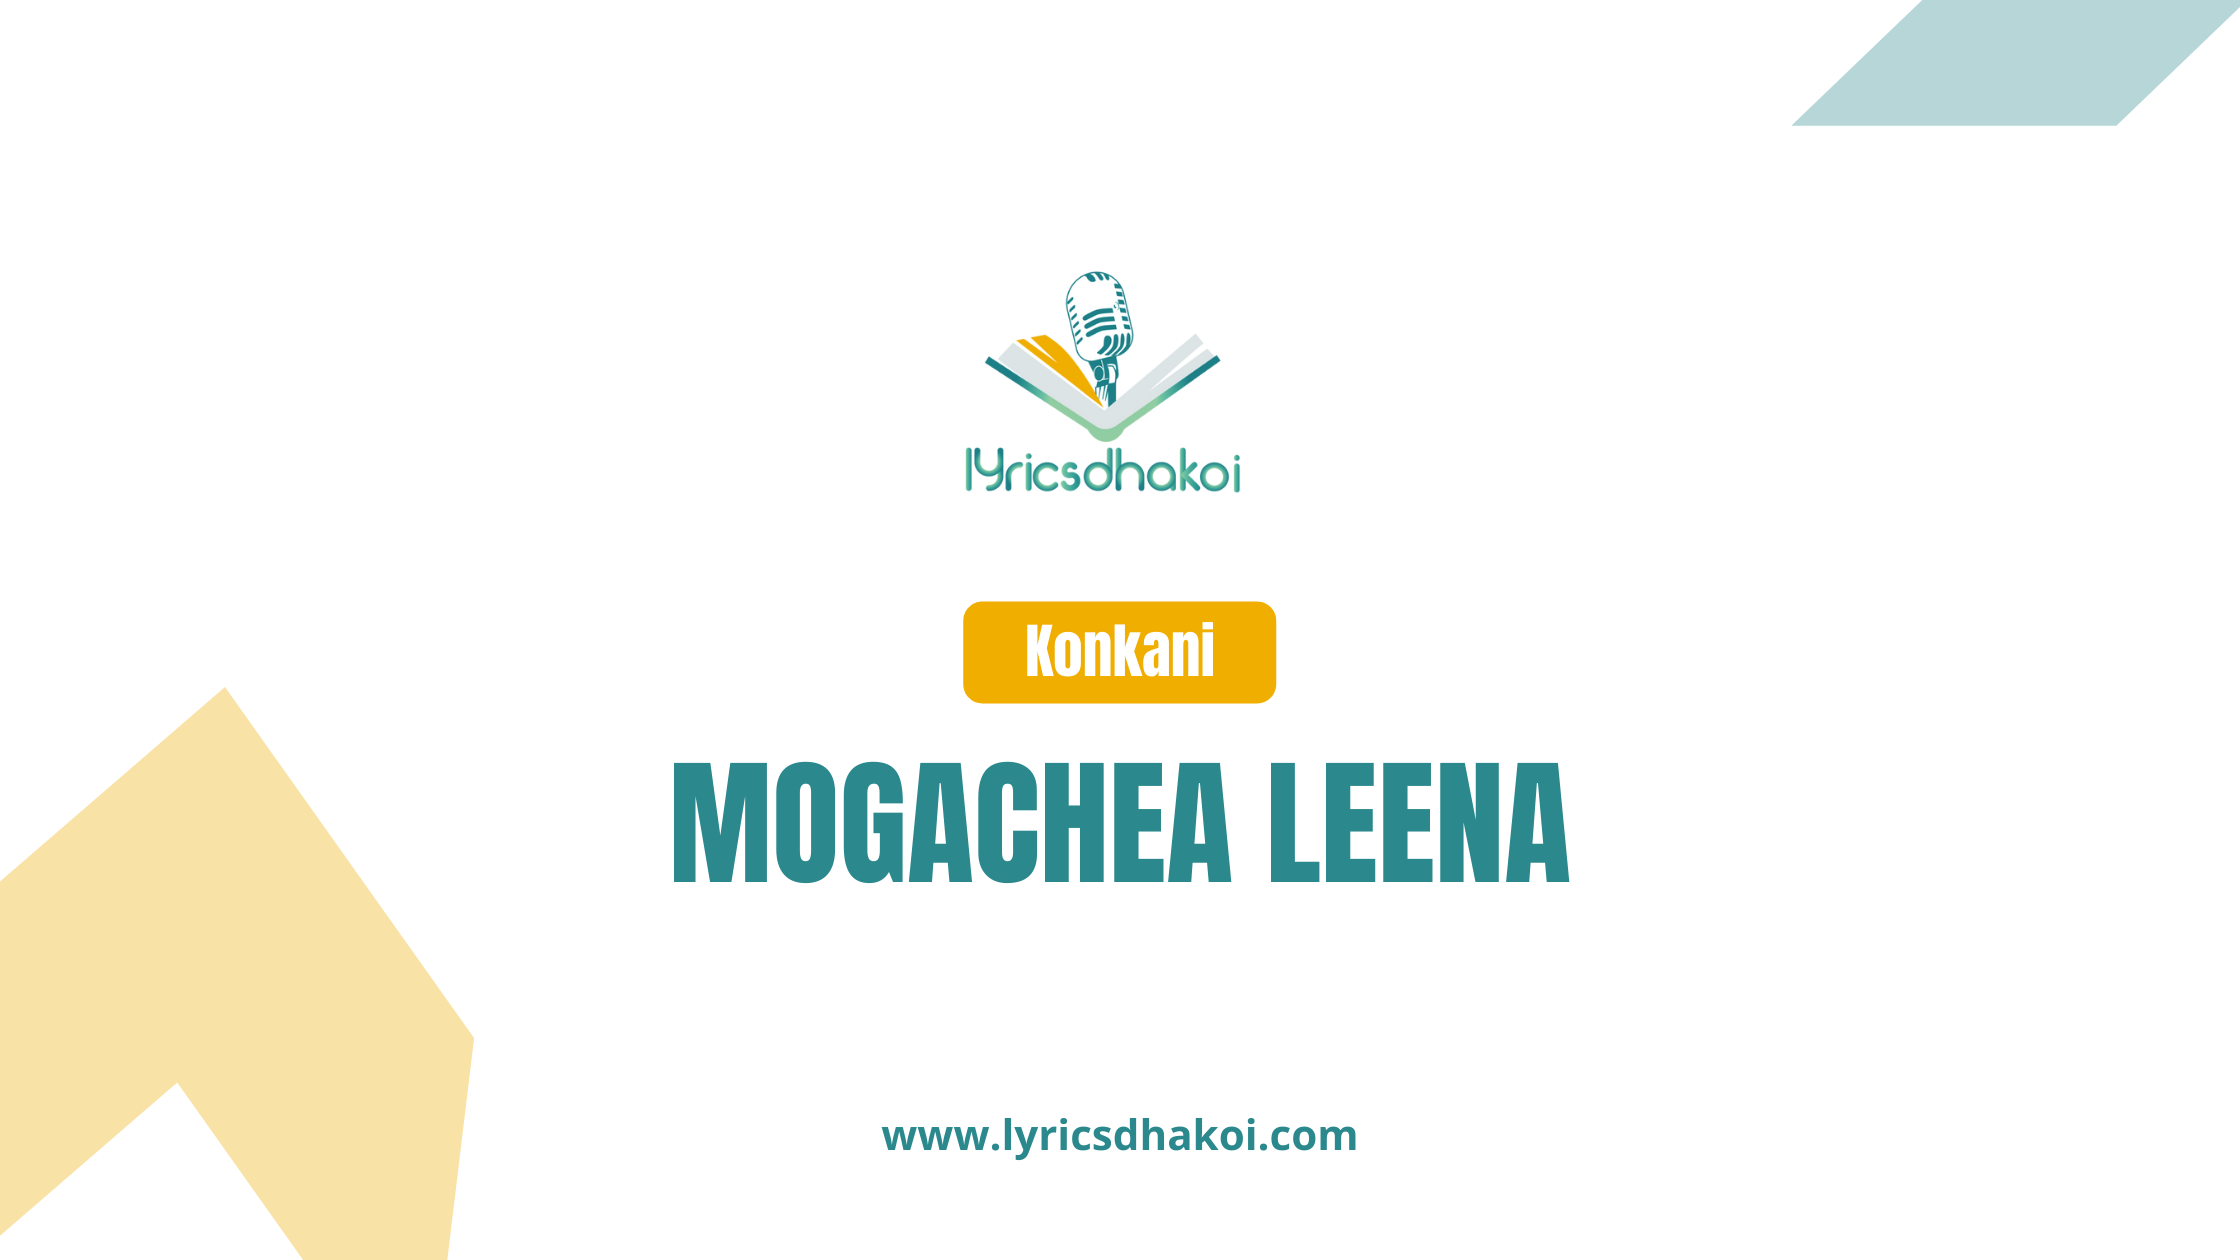 Mogachea Leena Konkani Lyrics for Karaoke Online - LyricsDhakoi.com